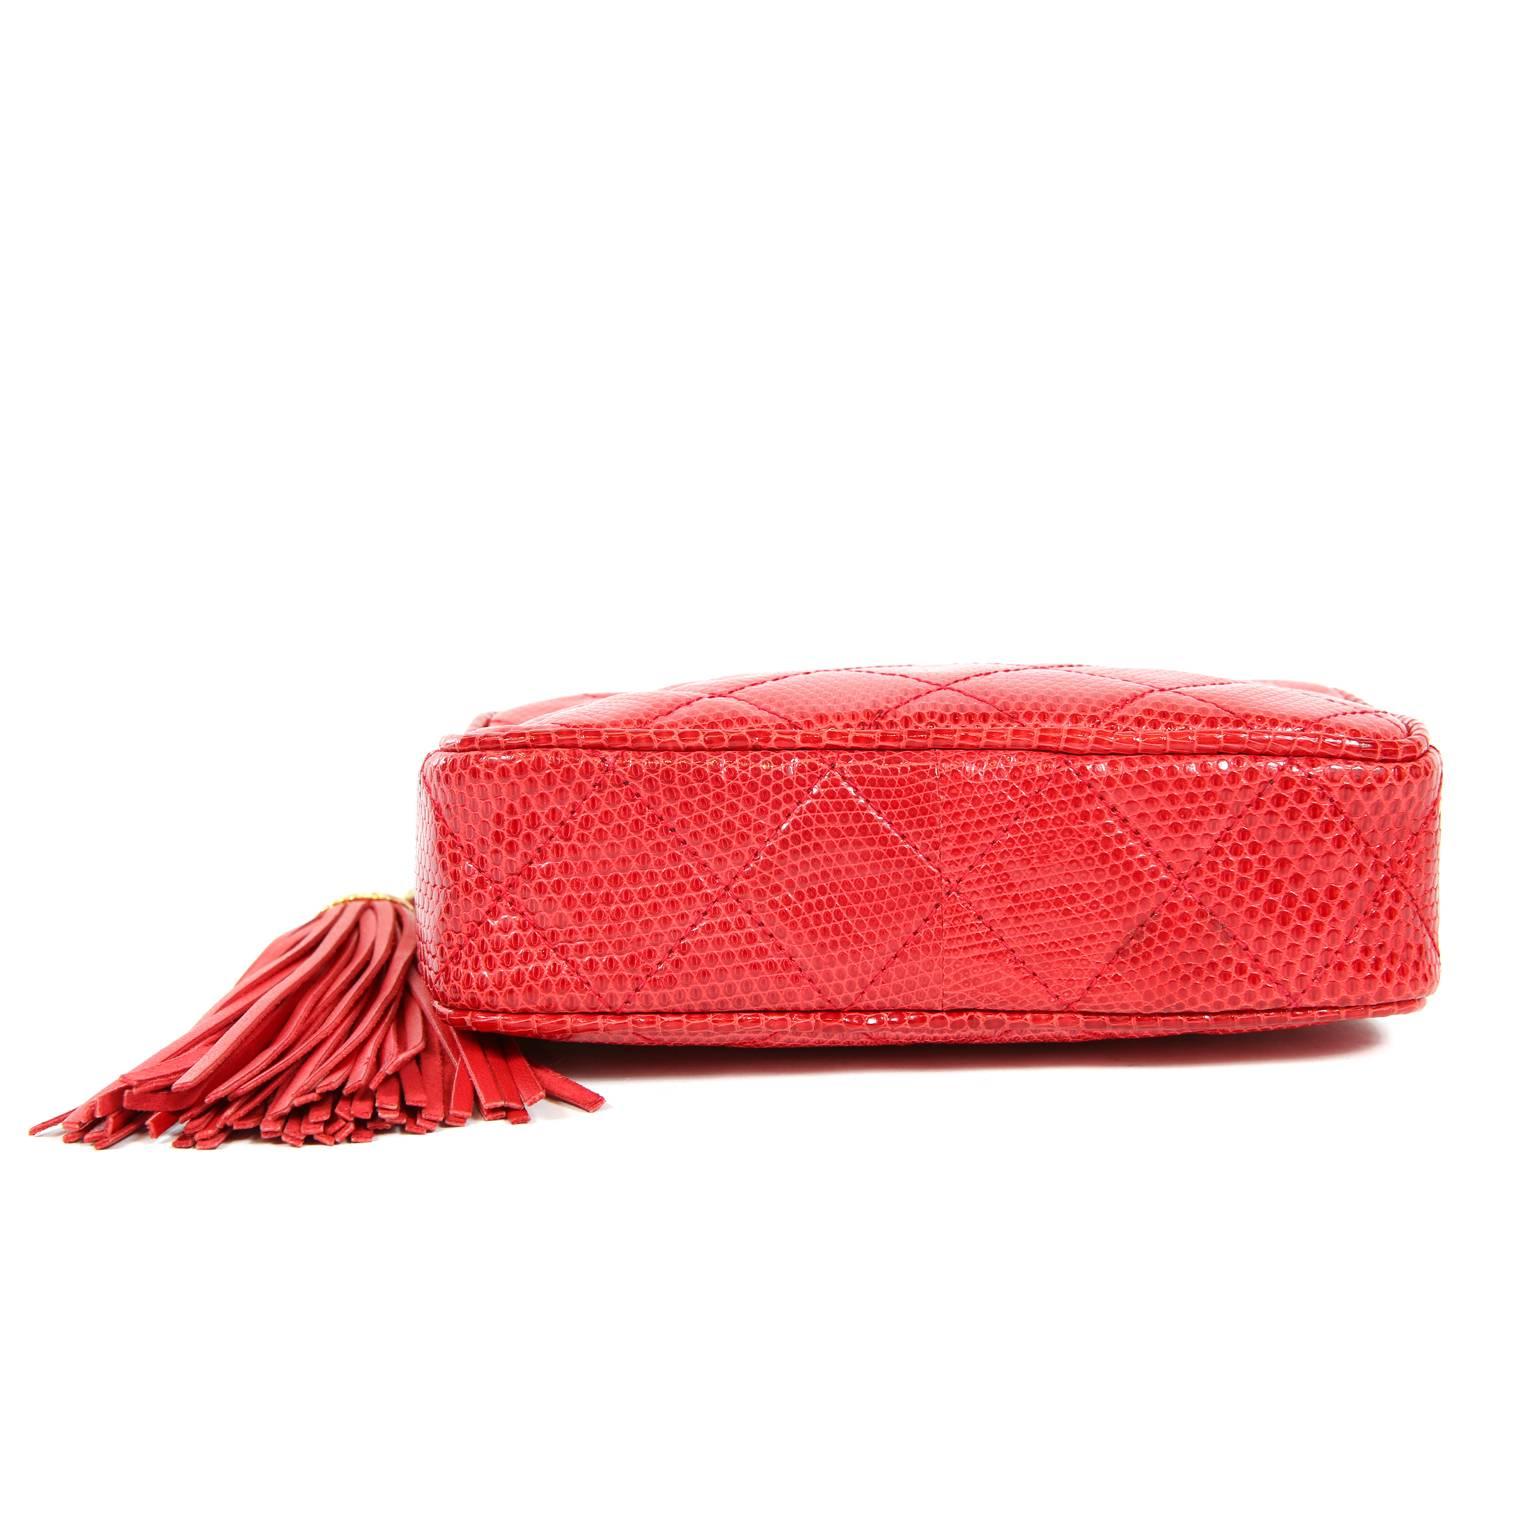 Chanel Red Lizard Vintage Tassel Clutch For Sale 1